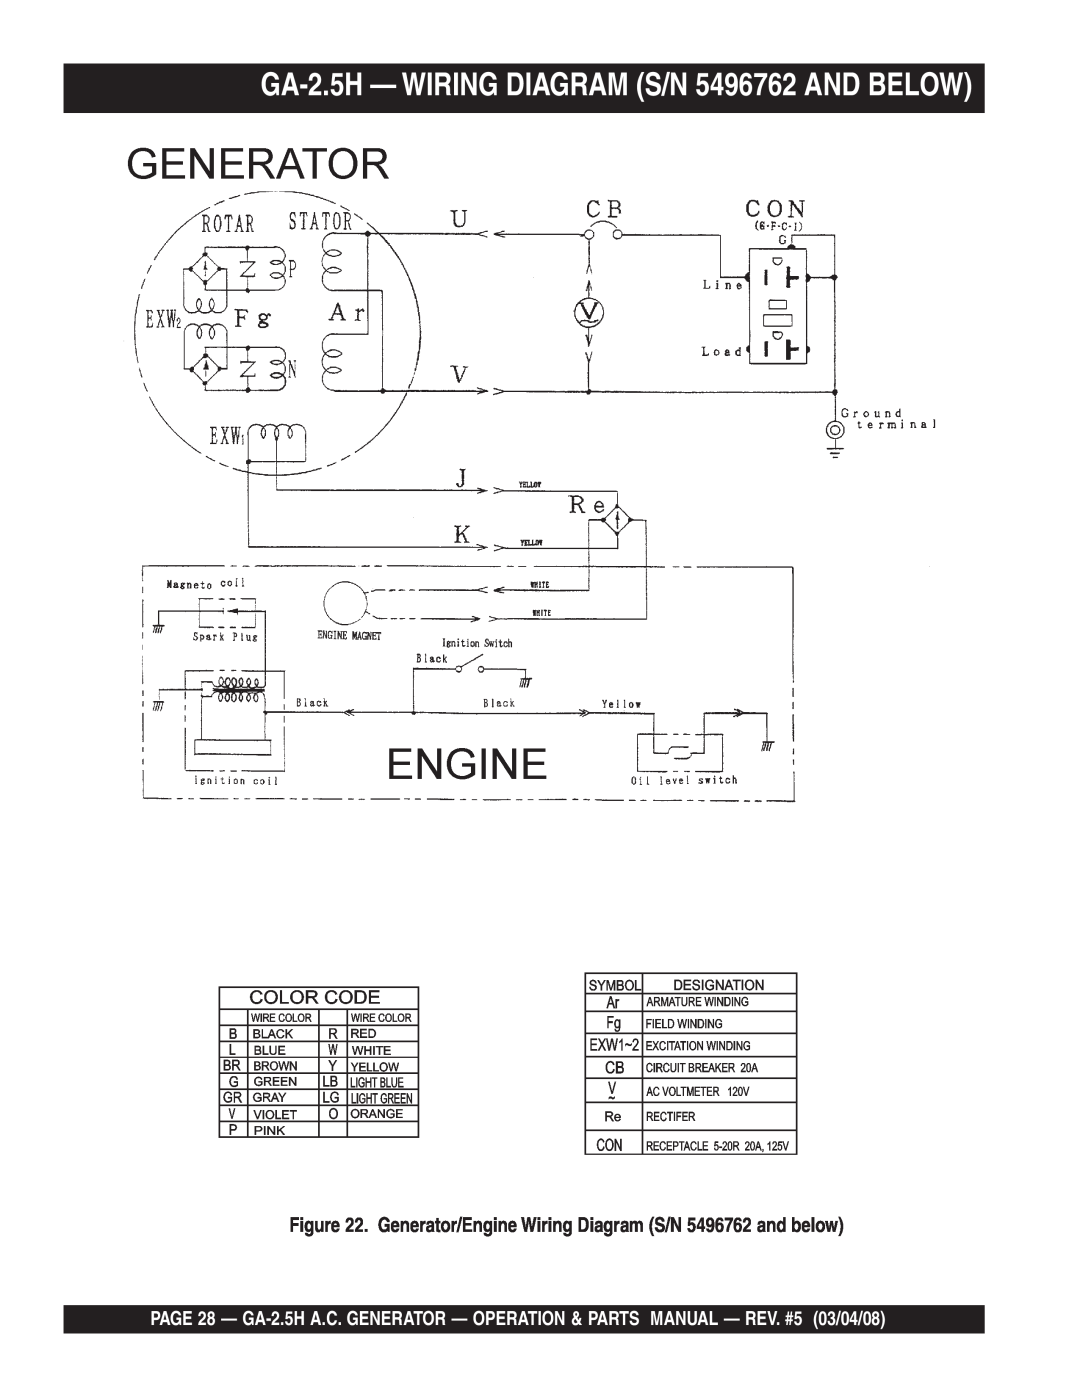 Multiquip manual GA-2.5H - WIRING DIAGRAM S/N 5496762 AND BELOW, Generator/Engine Wiring Diagram S/N 5496762 and below 